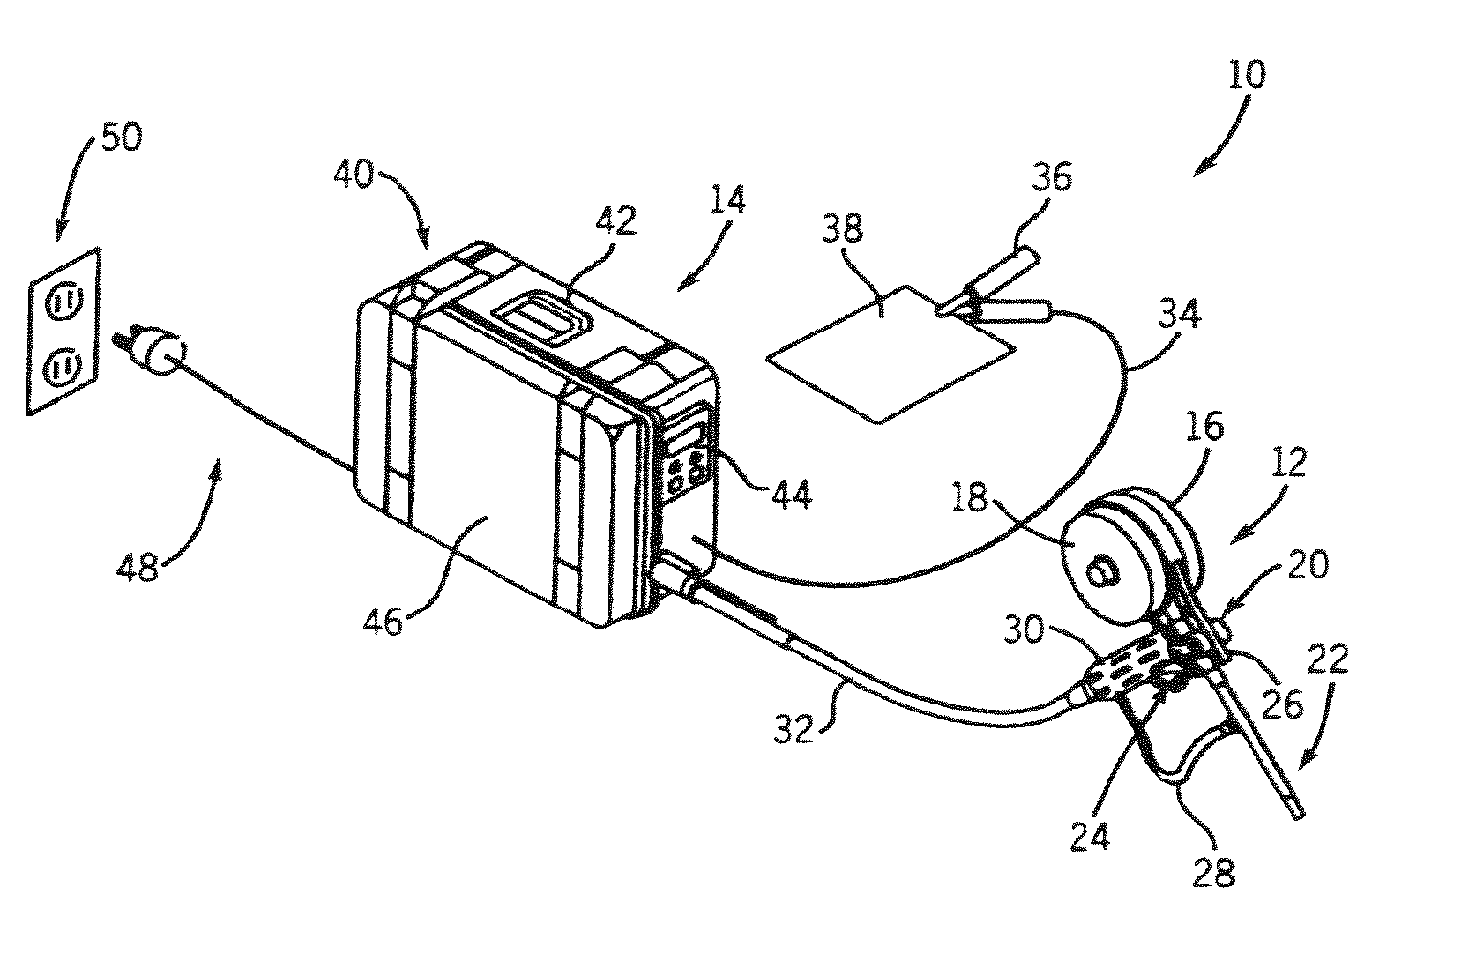 Spool gun having unitary shielding gas and weld power connector